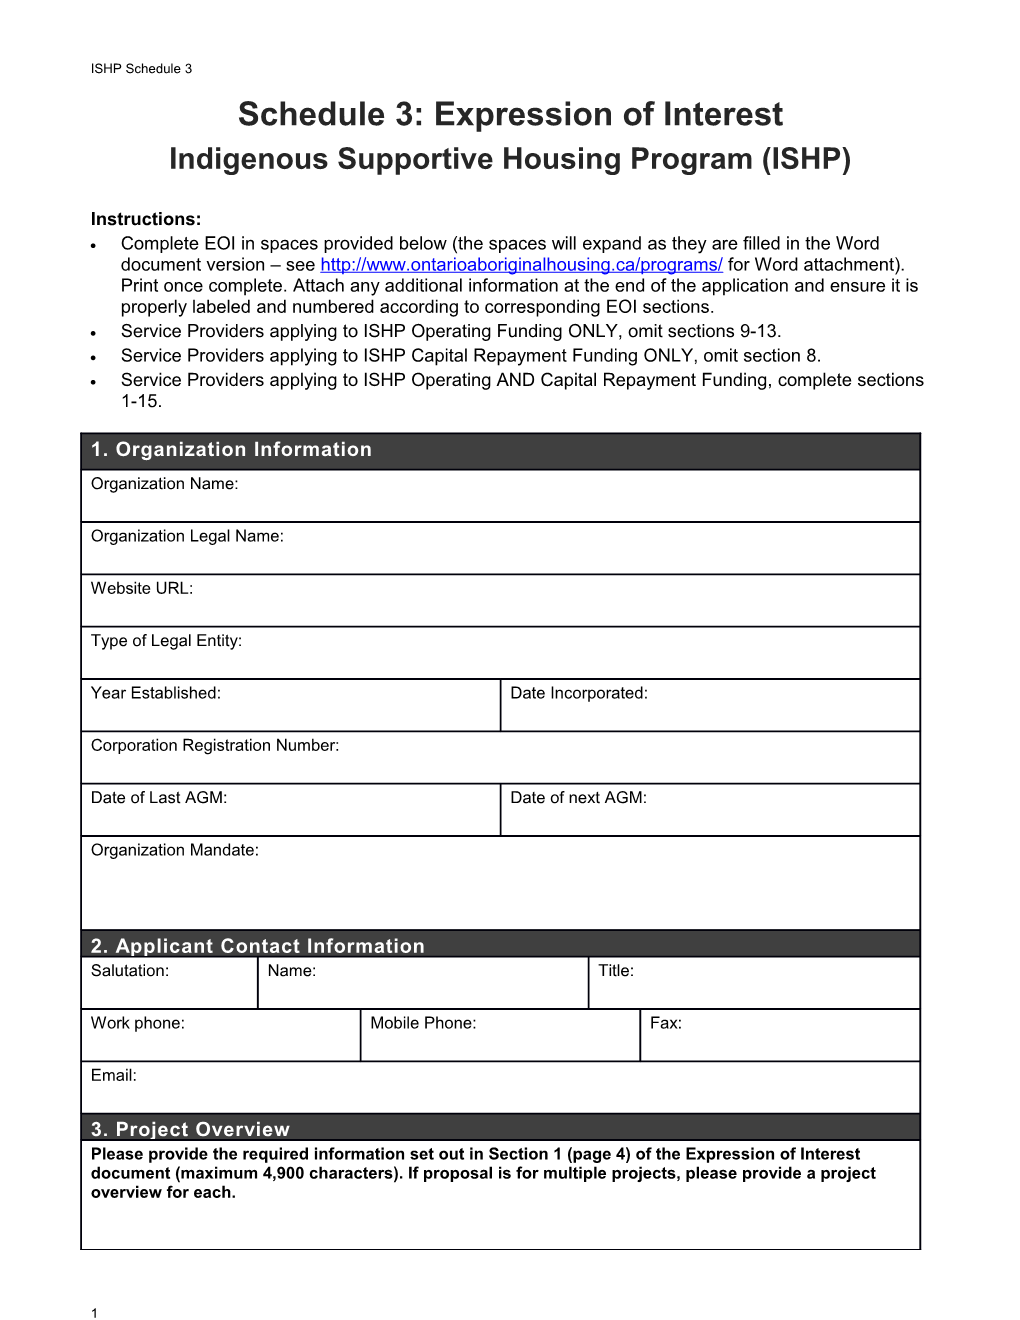 Indigenous Supportive Housing Program (ISHP)